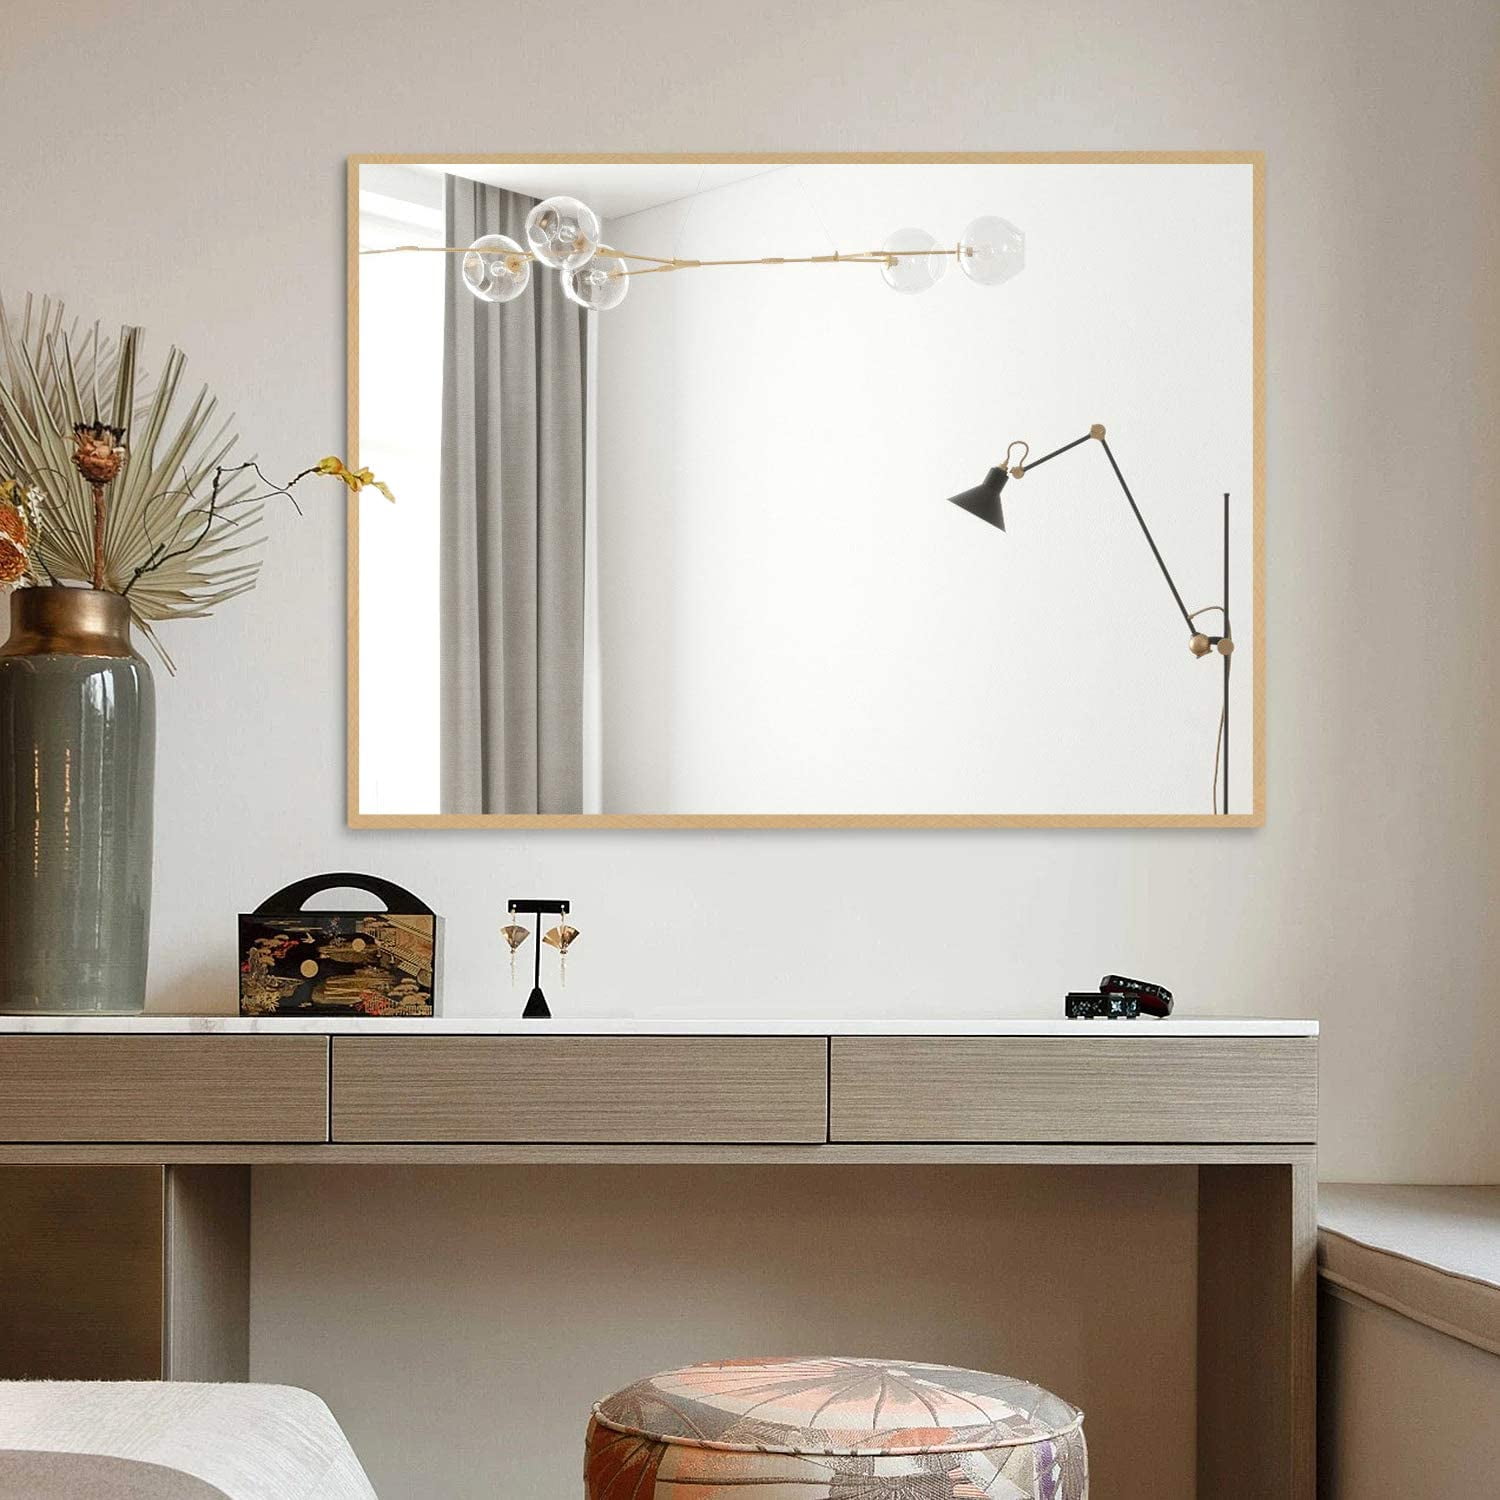 Mirrors for Wall Decor Rectangular Mirror Bathroom Wall Mounted Make Up ...